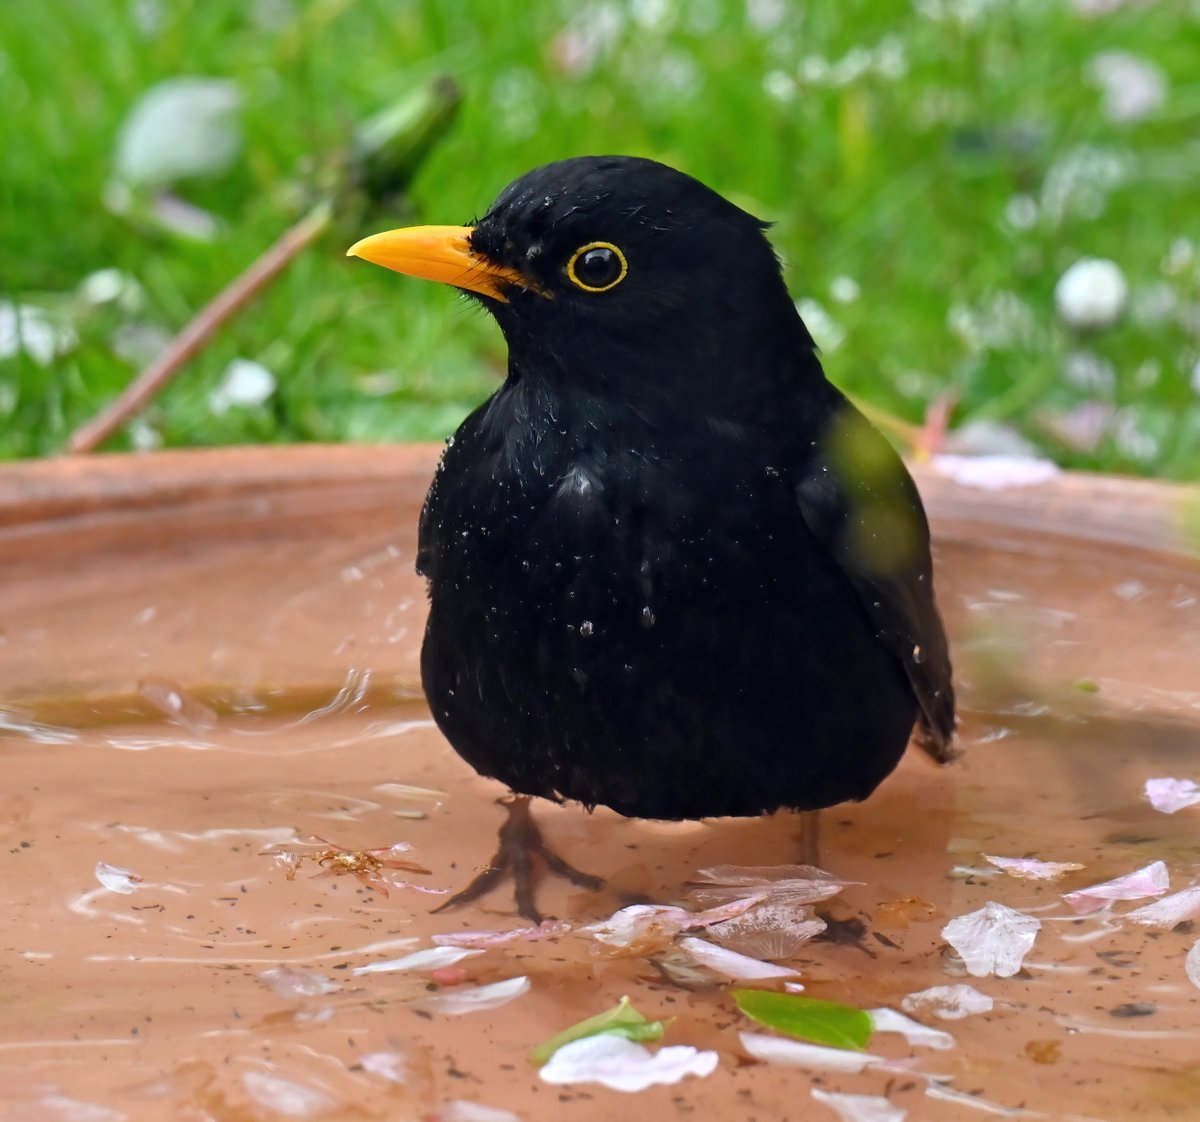 Blackbird in the bath! 😍😁🐦